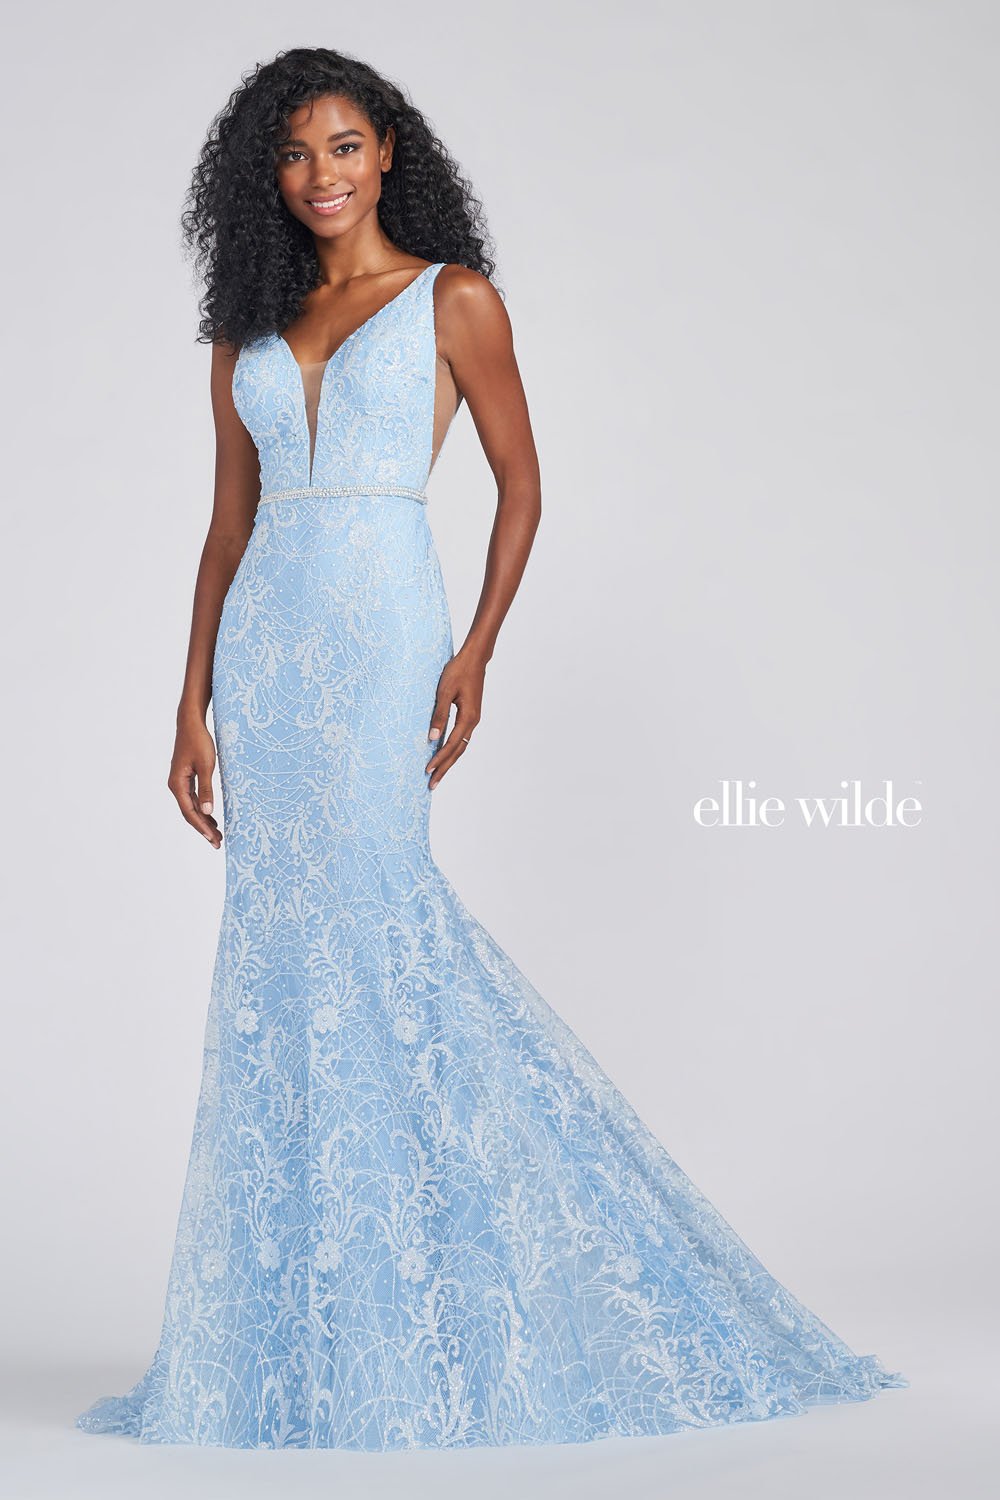 Ellie Wilde Sky Blue EW122056 Prom Dress Image.  Sky Blue formal dress.